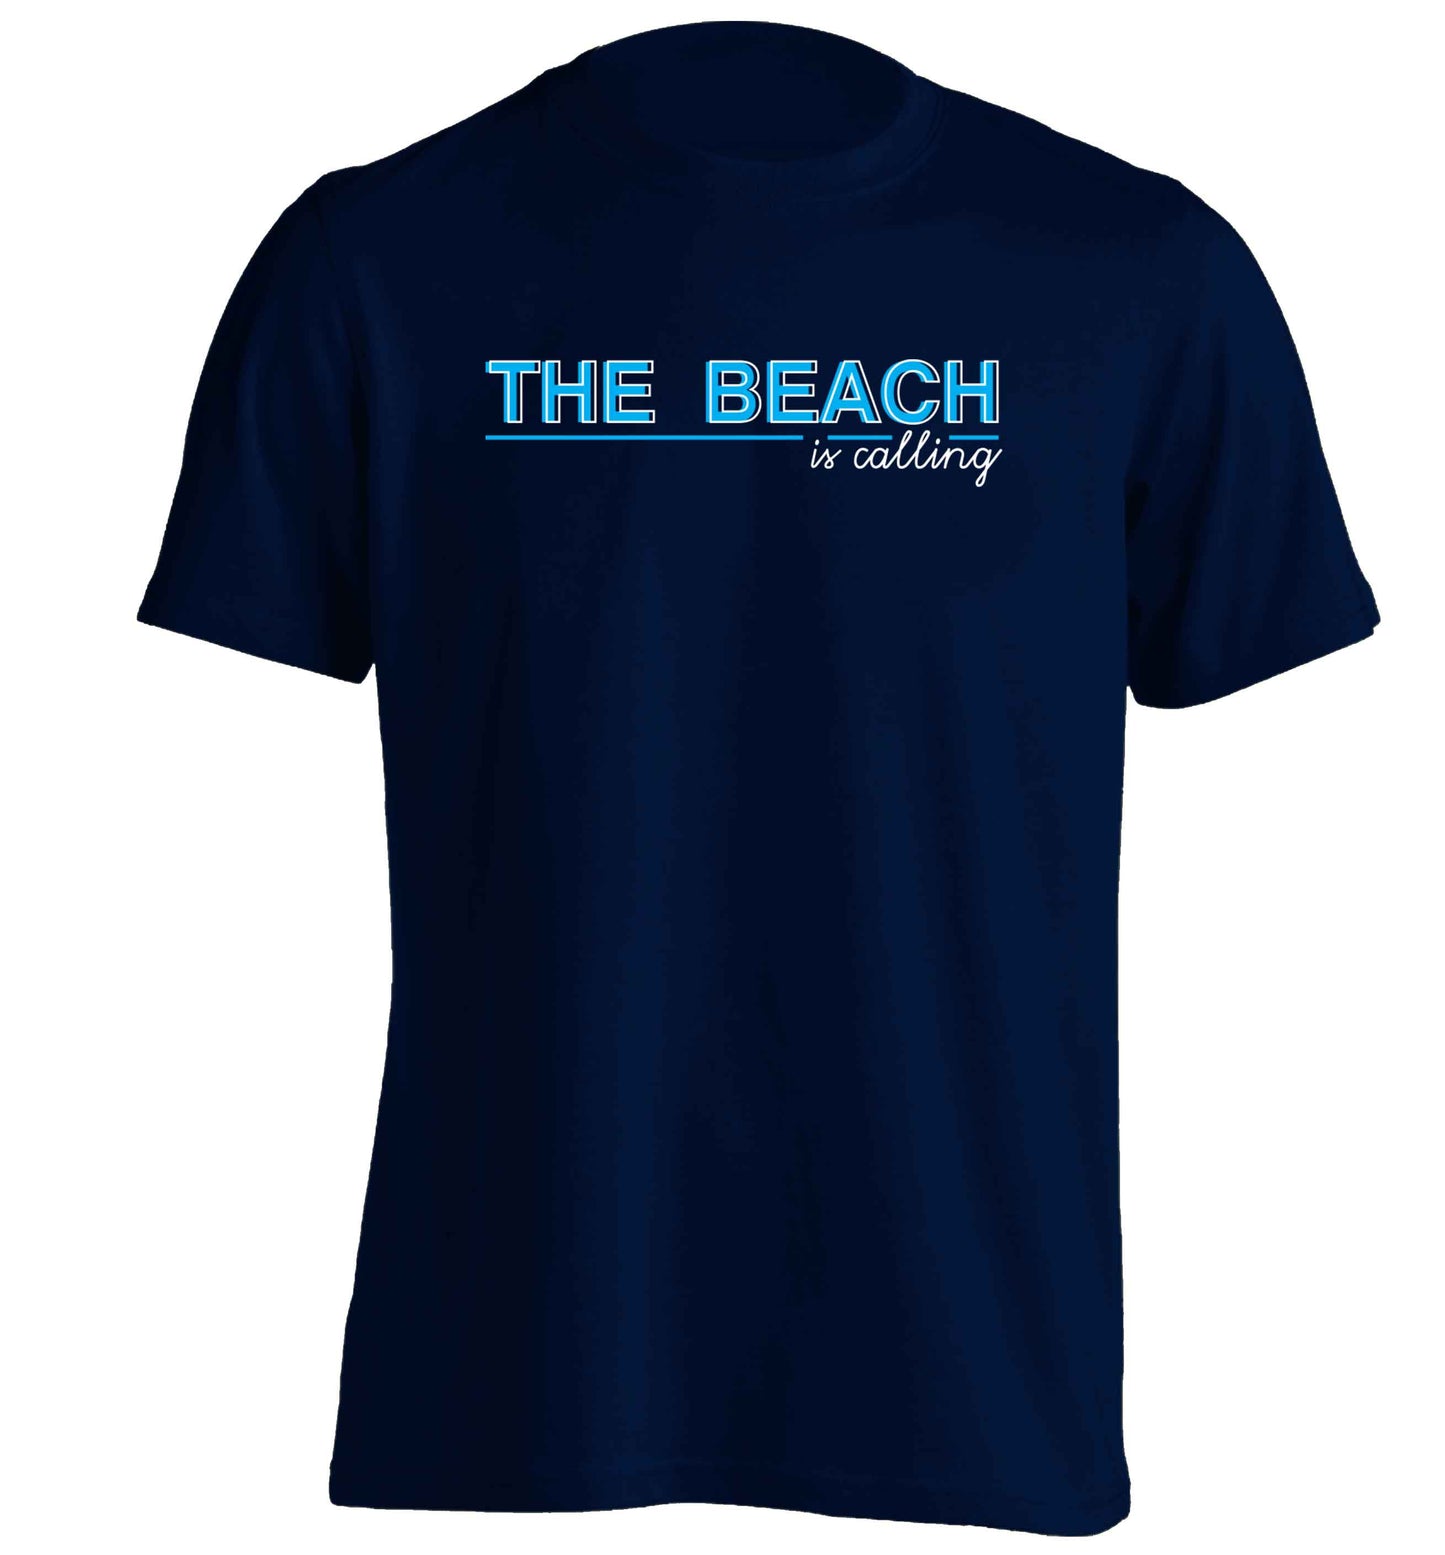 The beach is calling adults unisex navy Tshirt 2XL